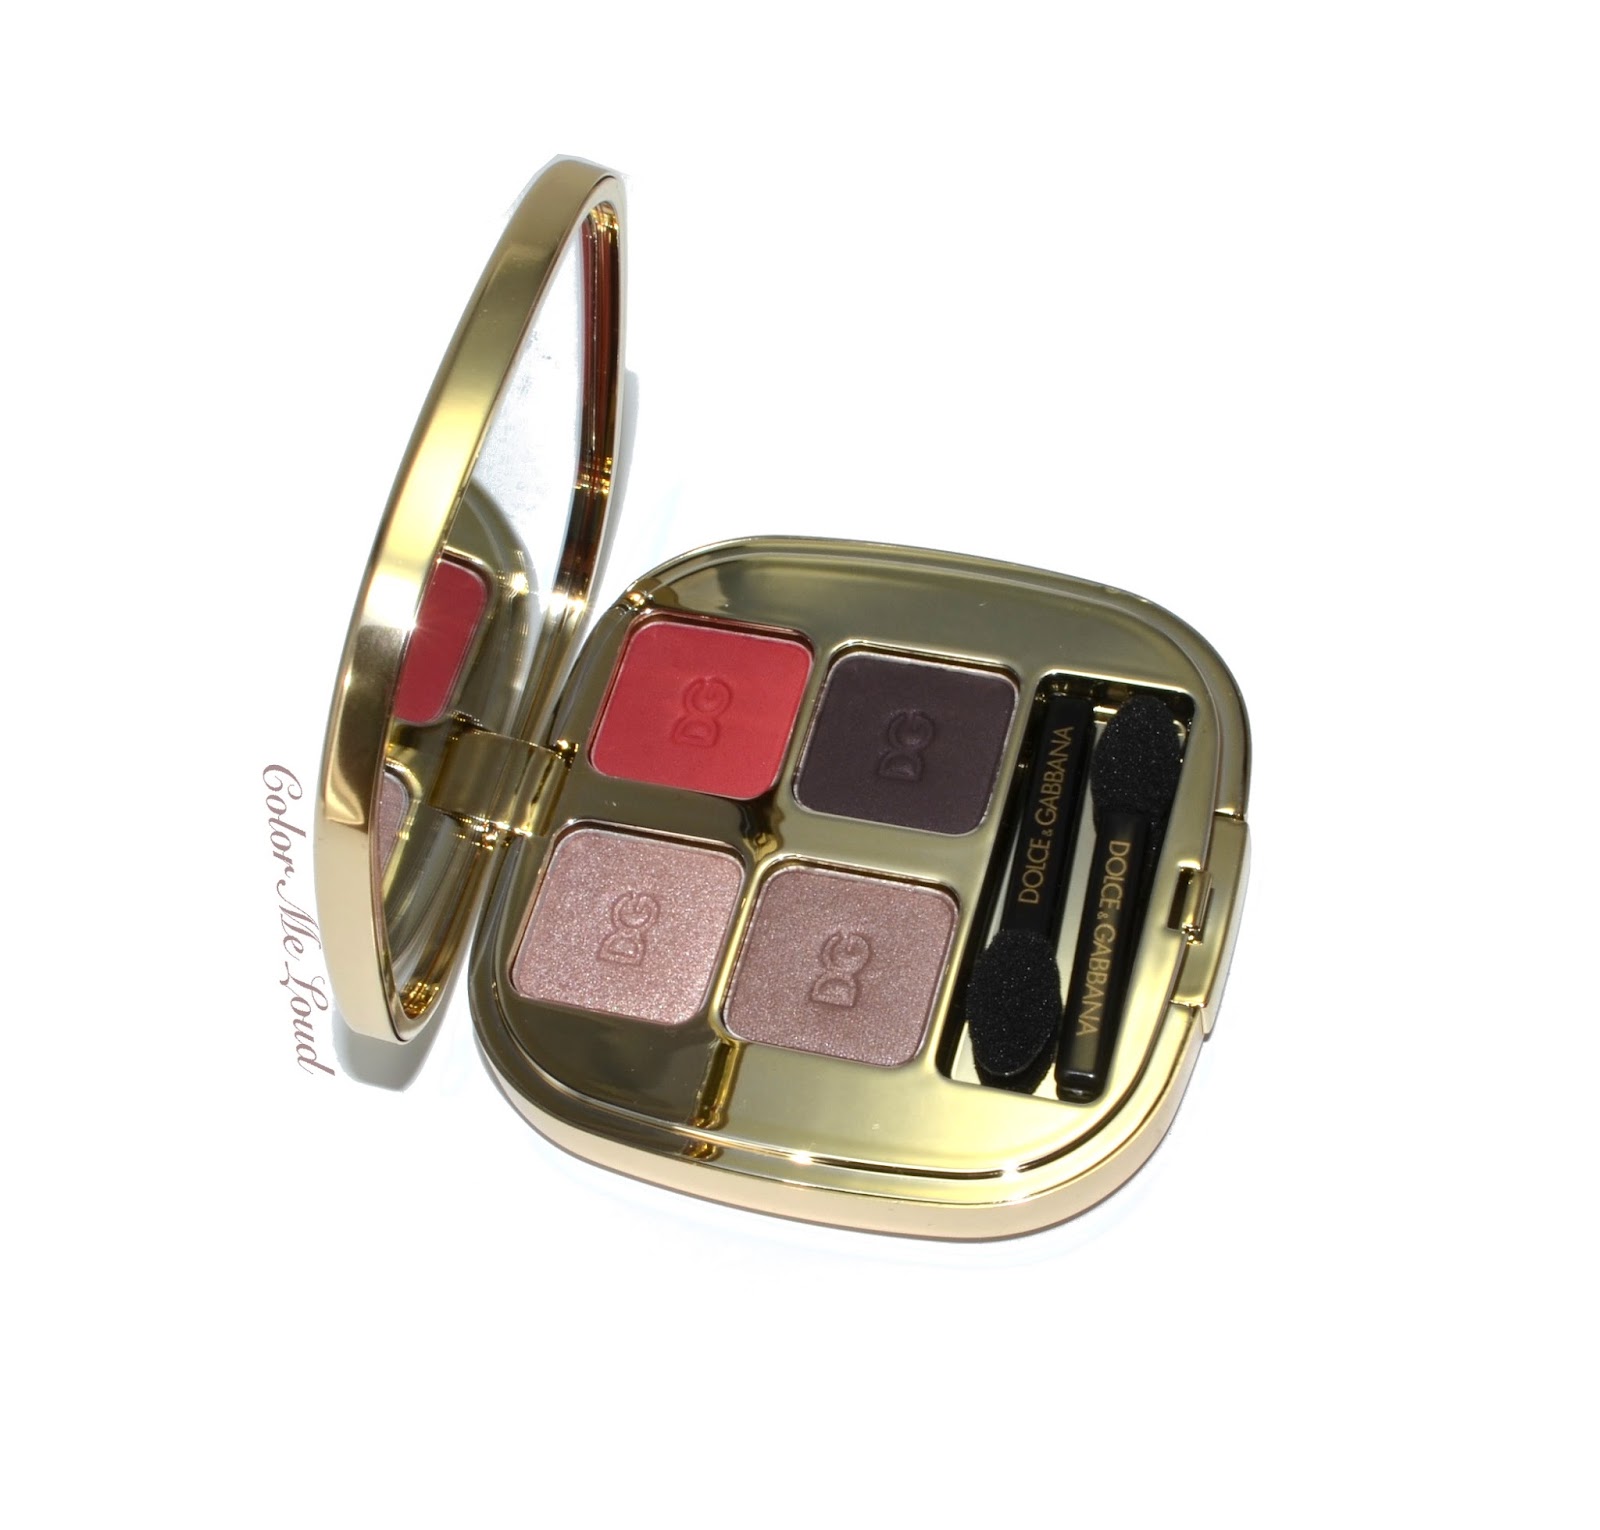 Dolce & Gabbana Smooth Eye Colour Quad #146 Lushies, Review